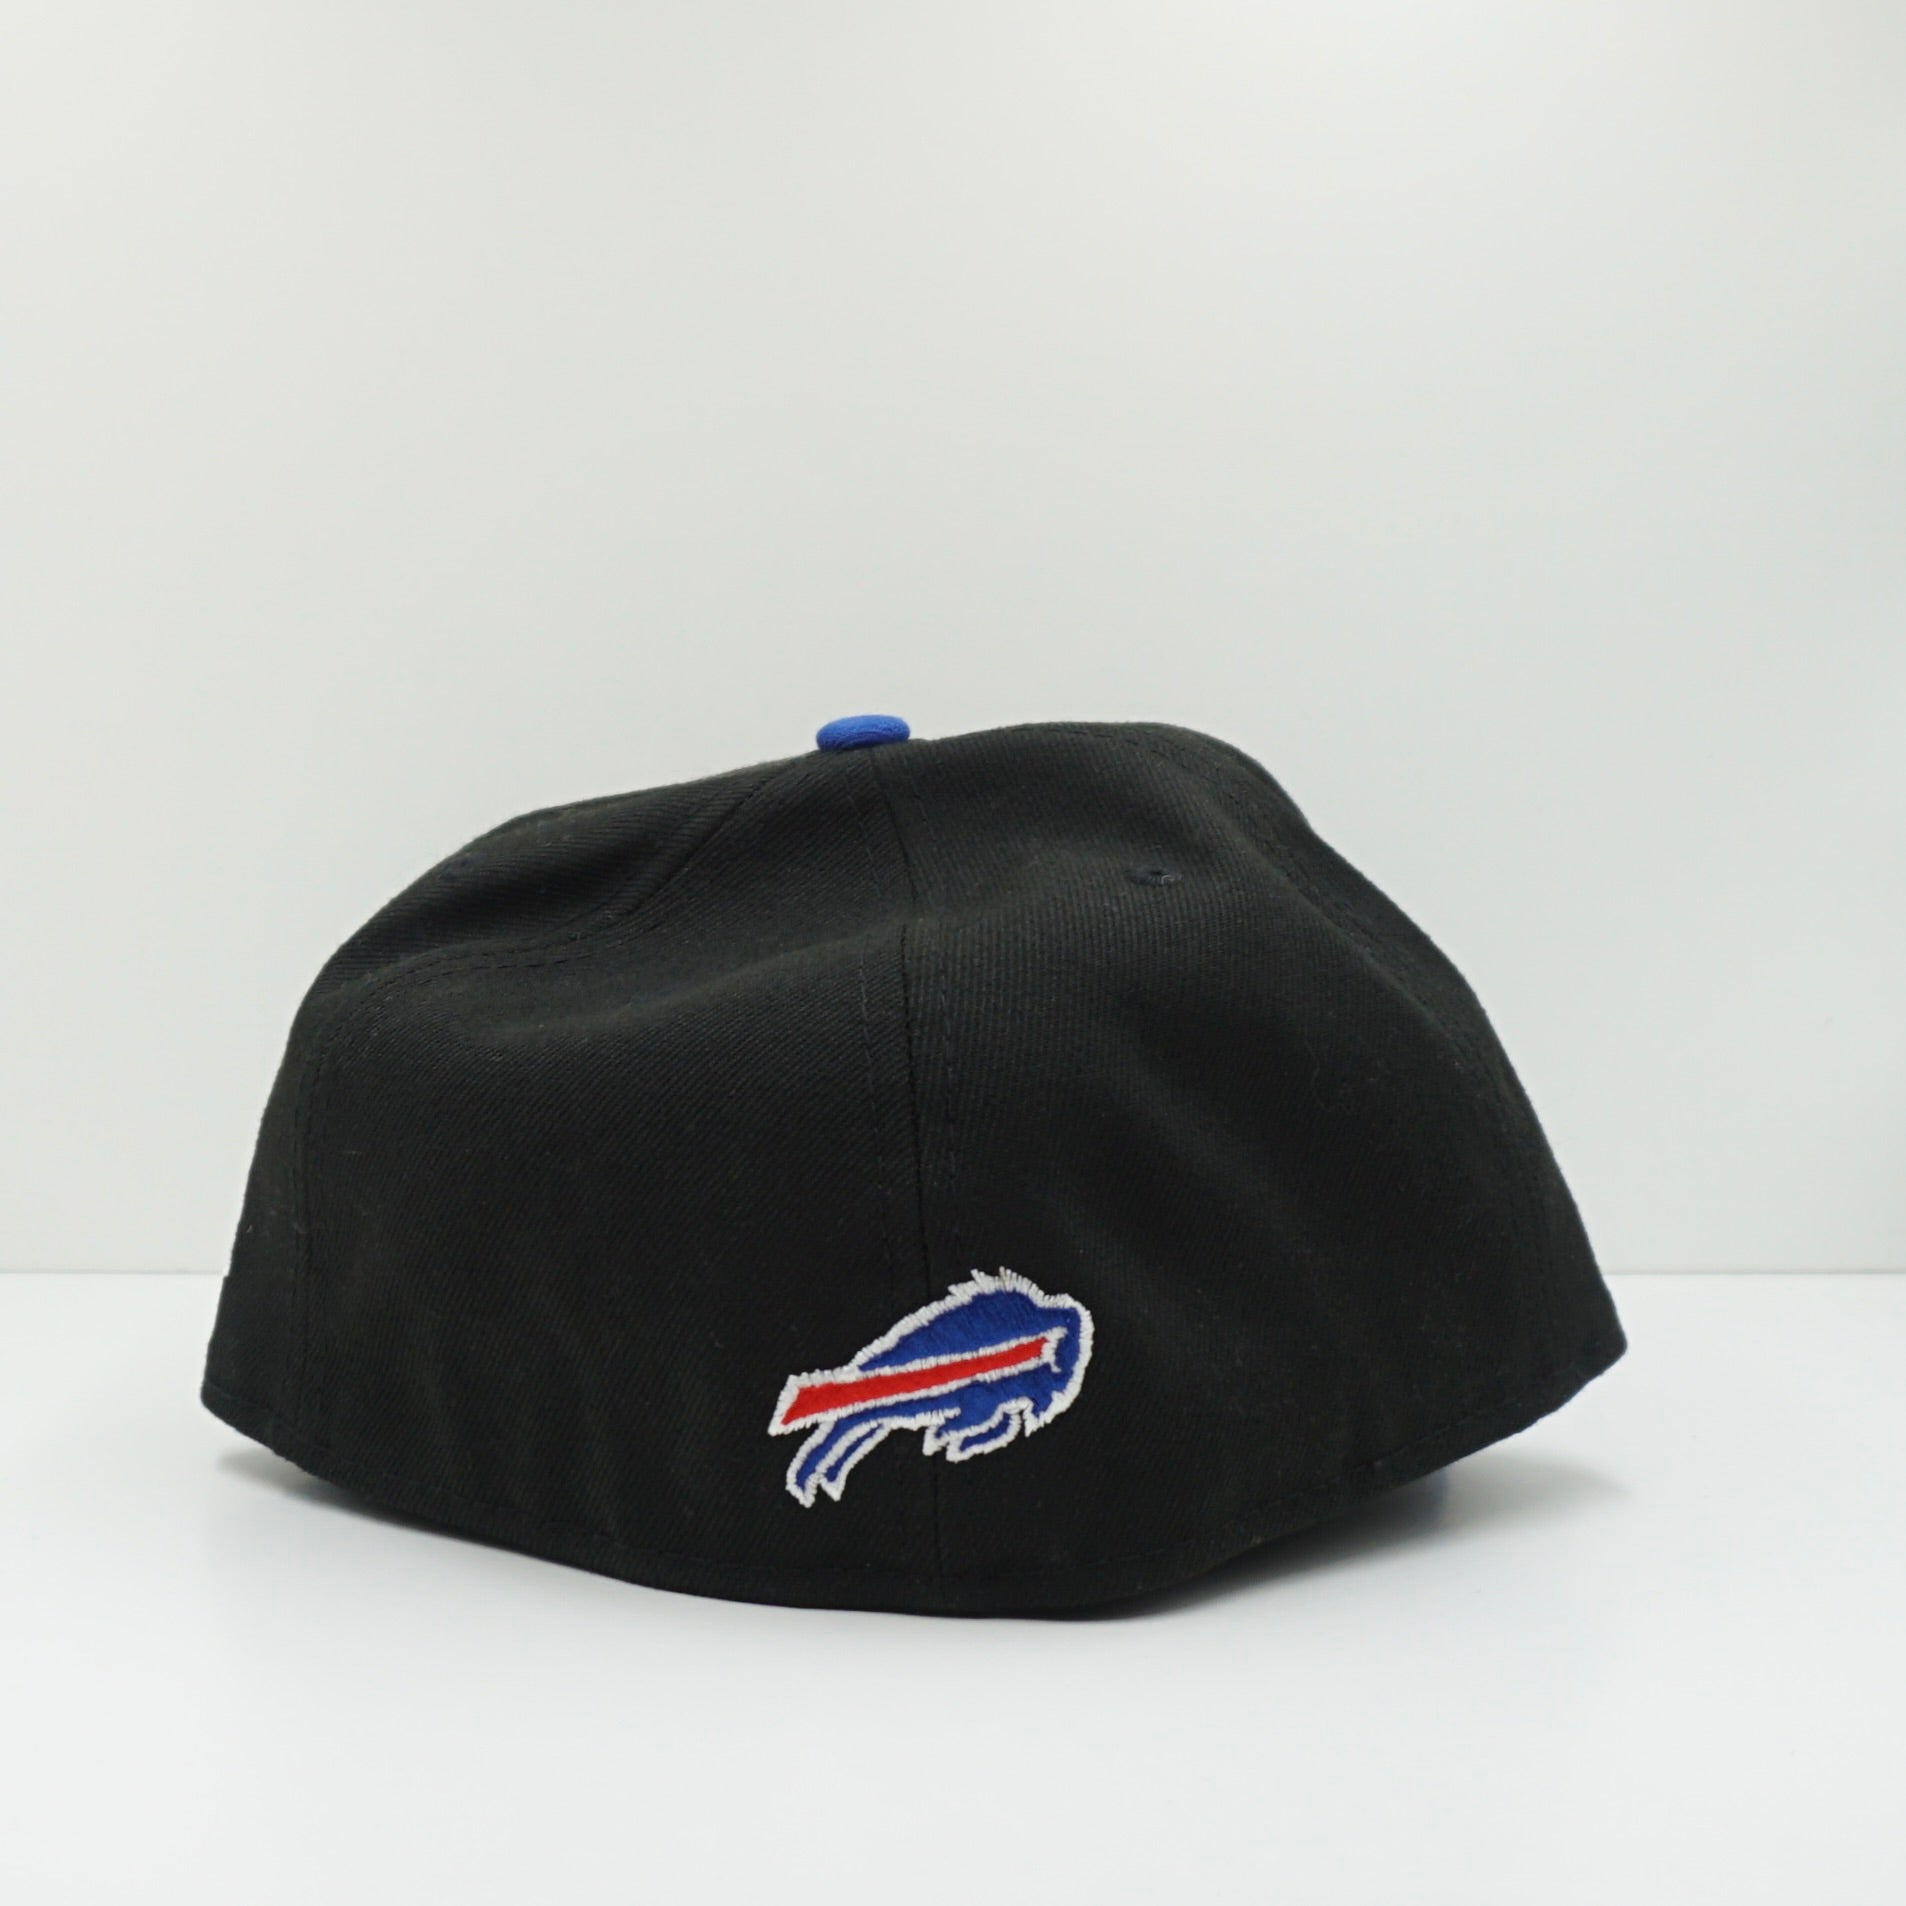 New Era Buffalo Bills Black/Blue Fitted Cap